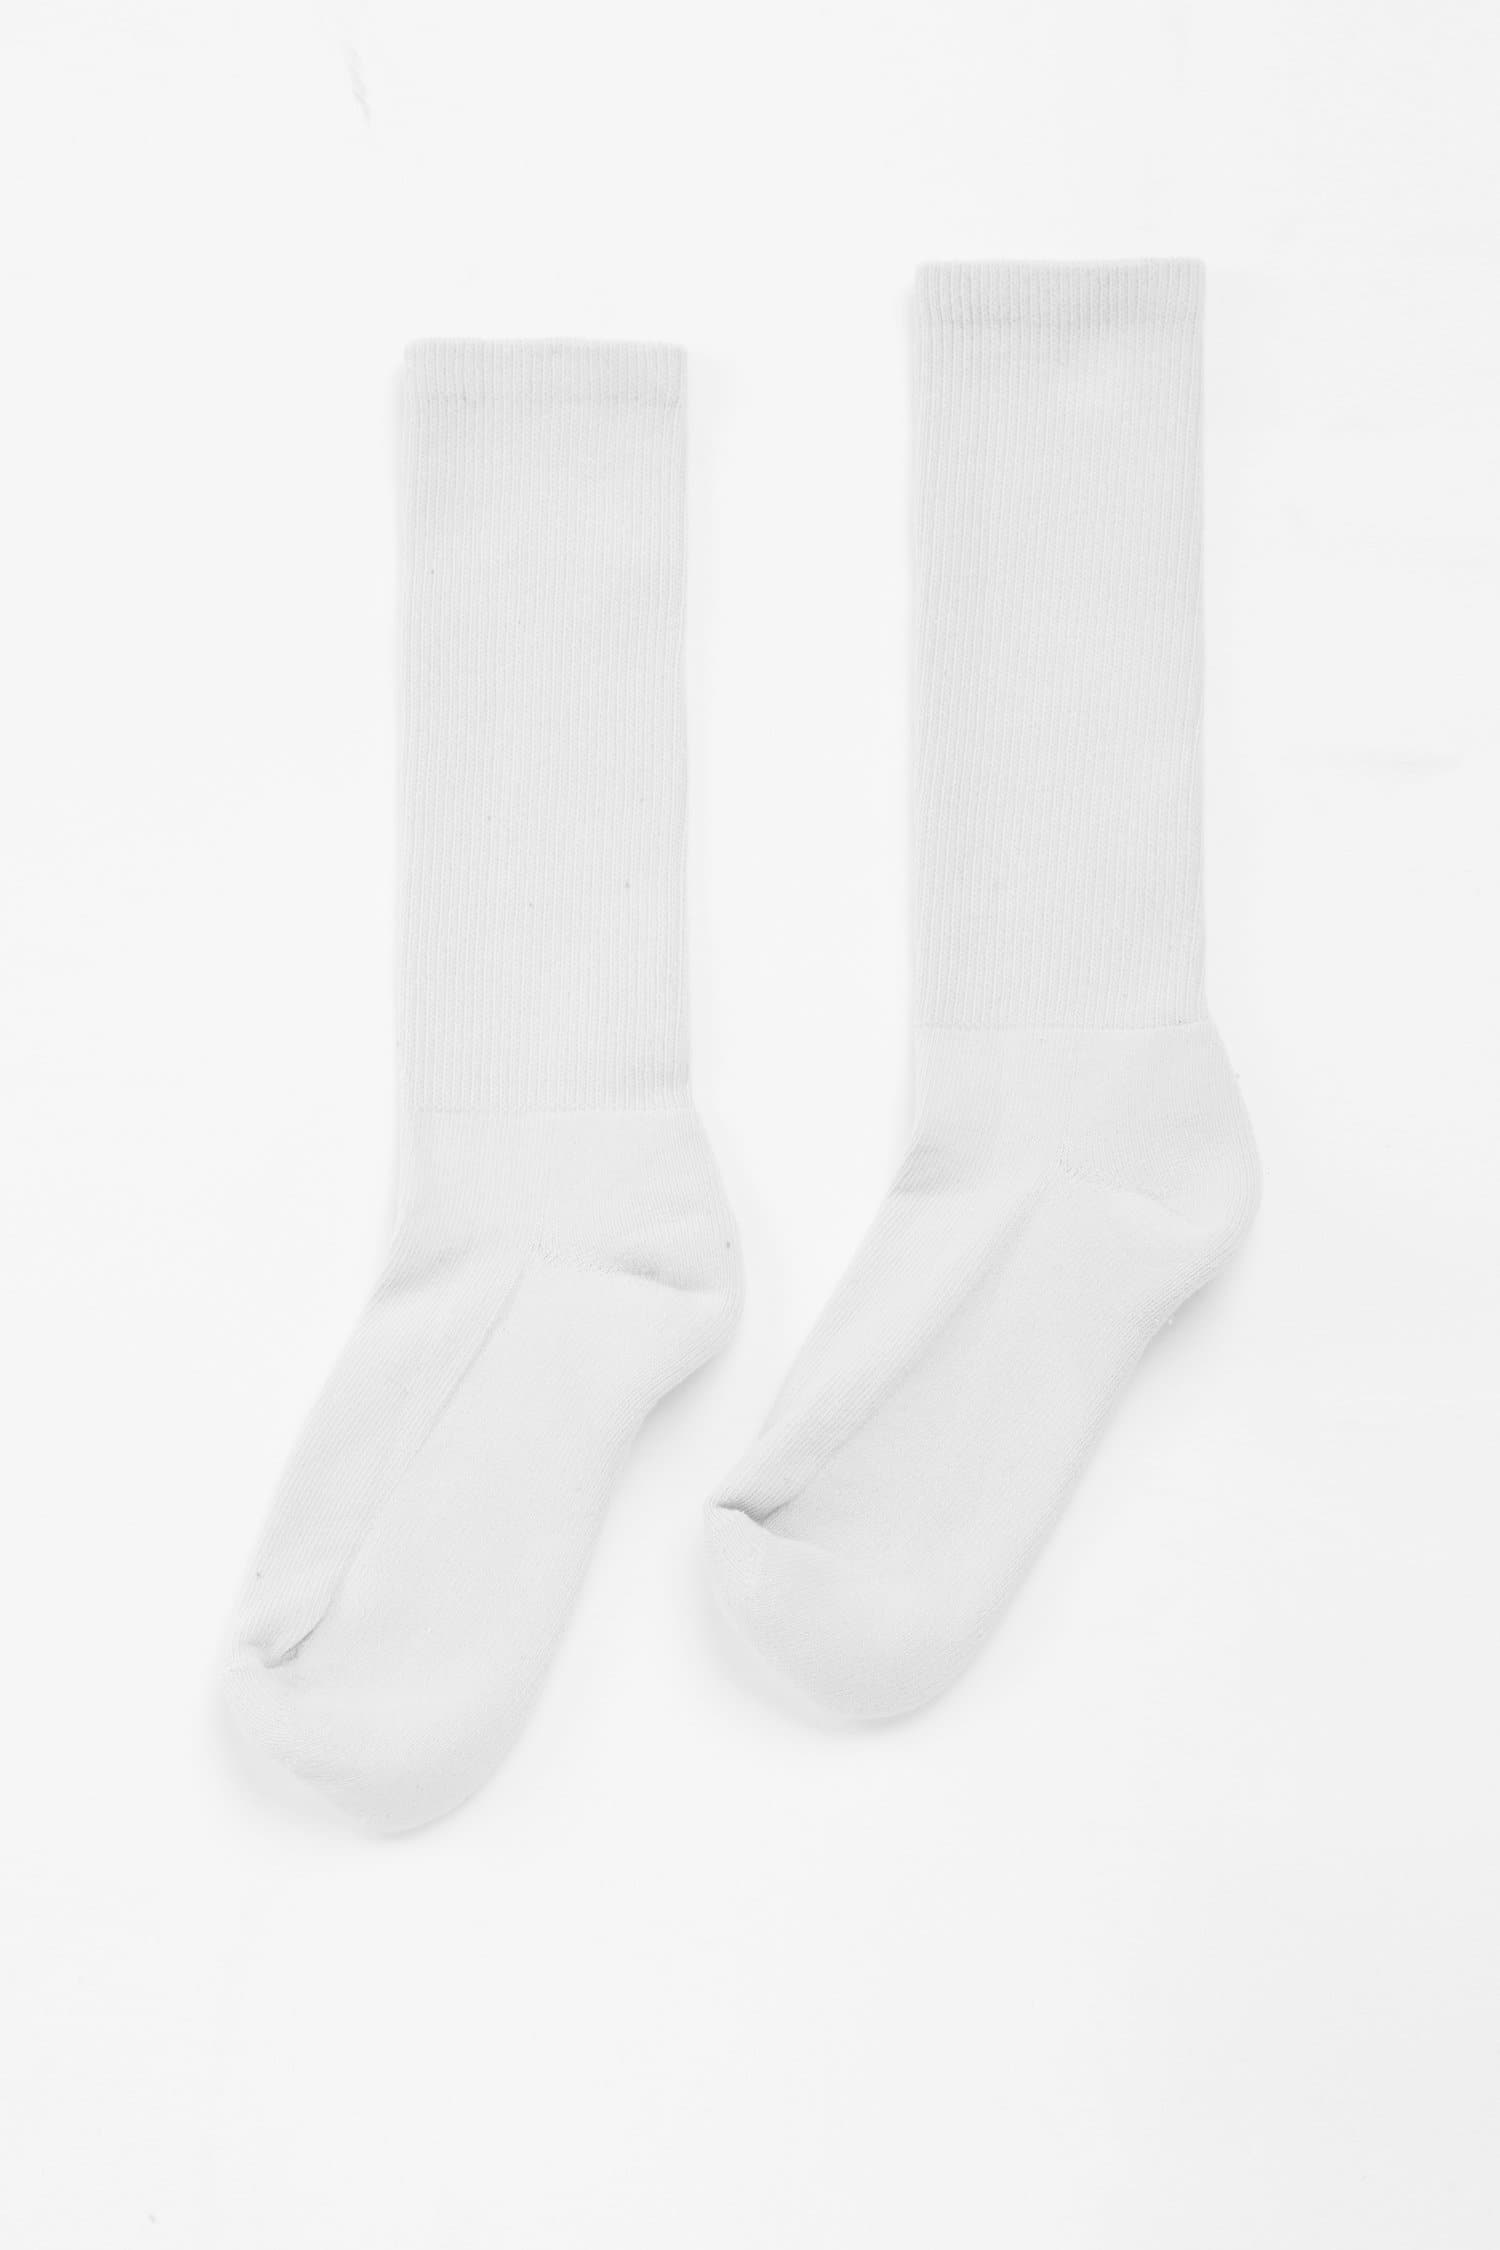  Aluo Socks Unisex Adult Sockshosiery Dye Letter V Designer Socks  Fashion Trend Hip Hop Socks (White),One Size : Clothing, Shoes & Jewelry